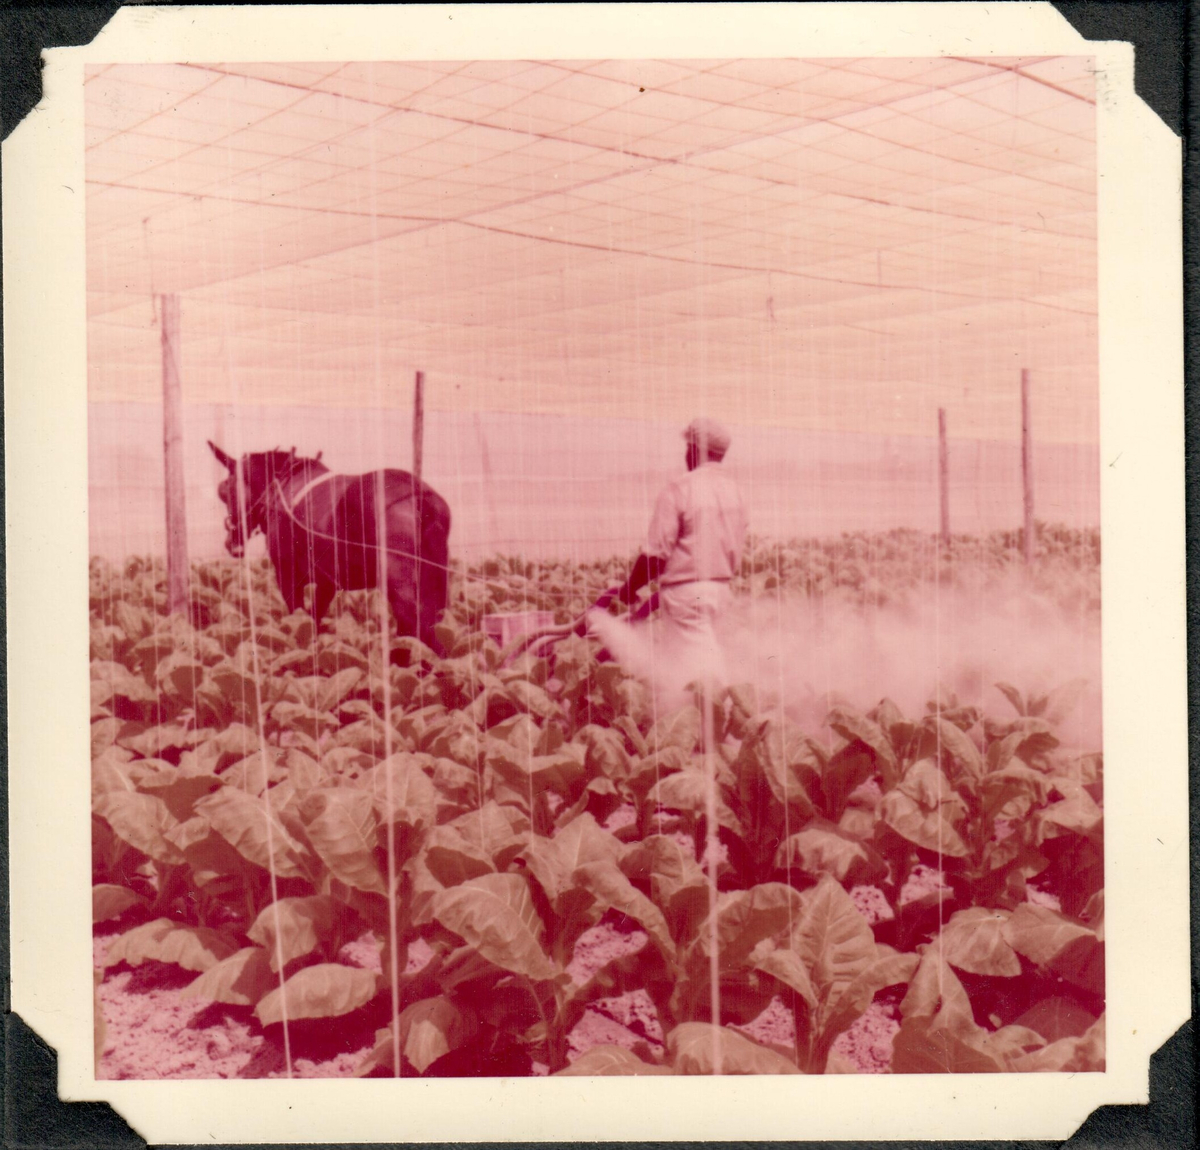 Tobaksodling. Tobaksodlare vid tobaksfälten.
Utland USA, odling.